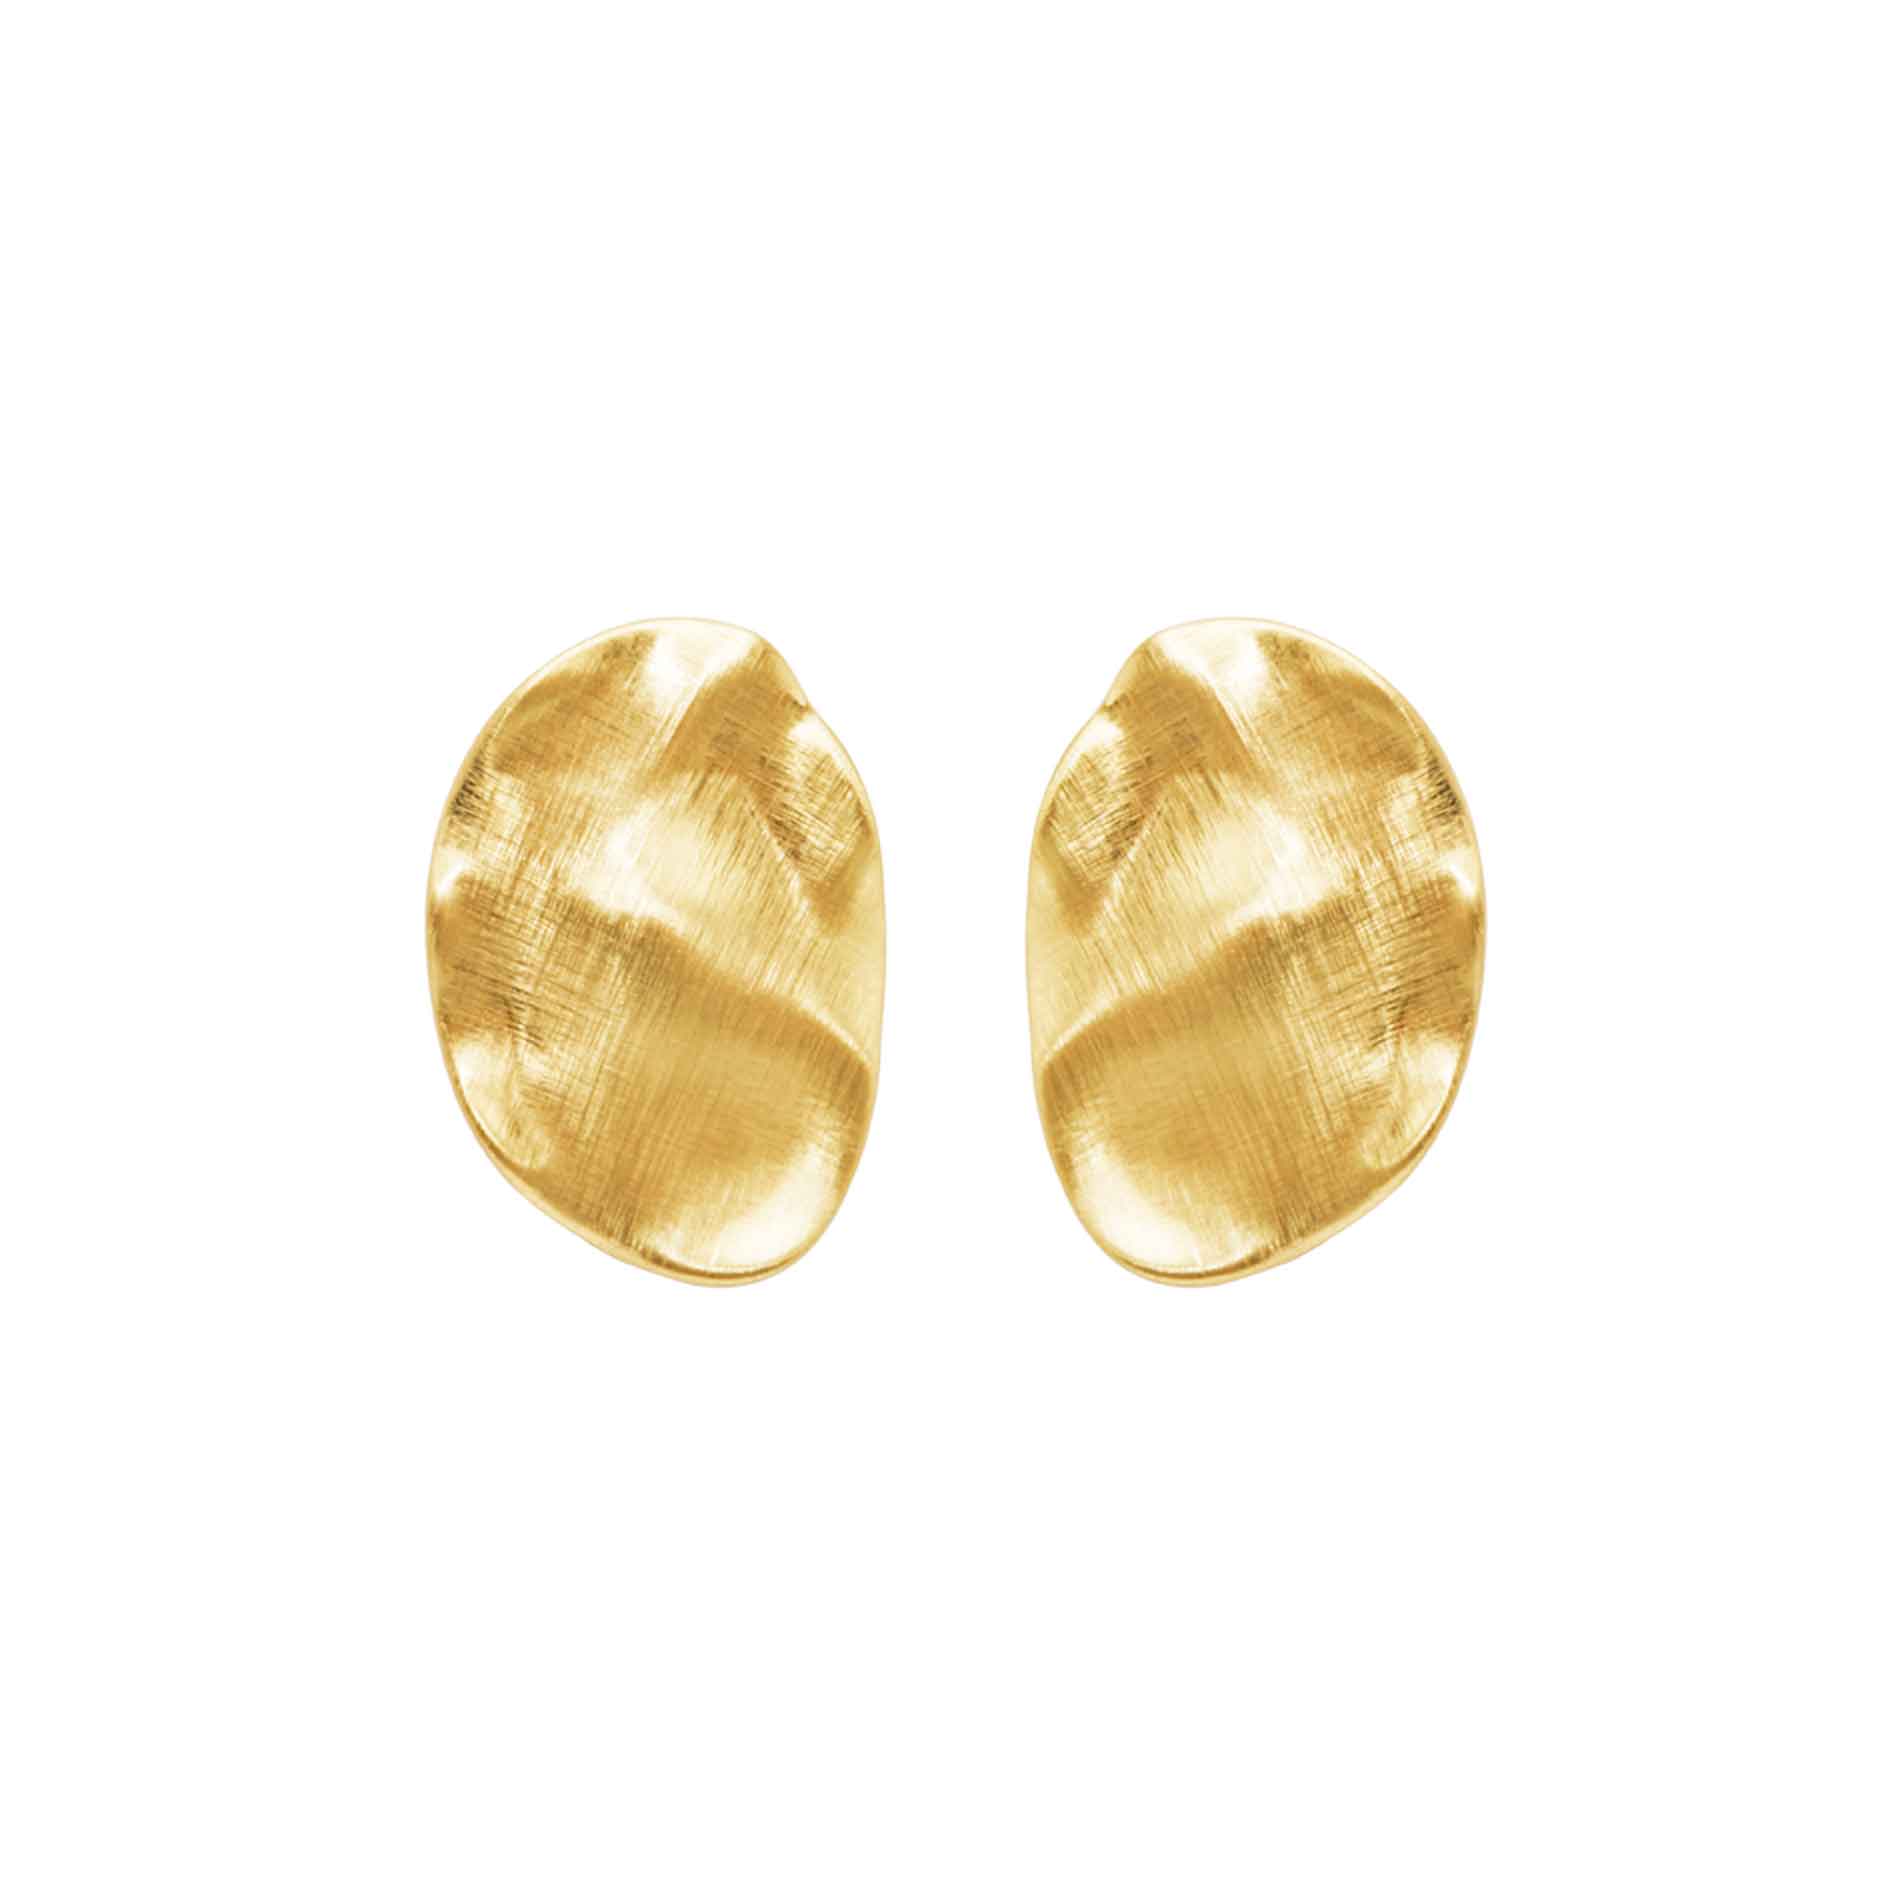 Dansk Smykkekunst Alaya Rock Earrings - Gold Plating 